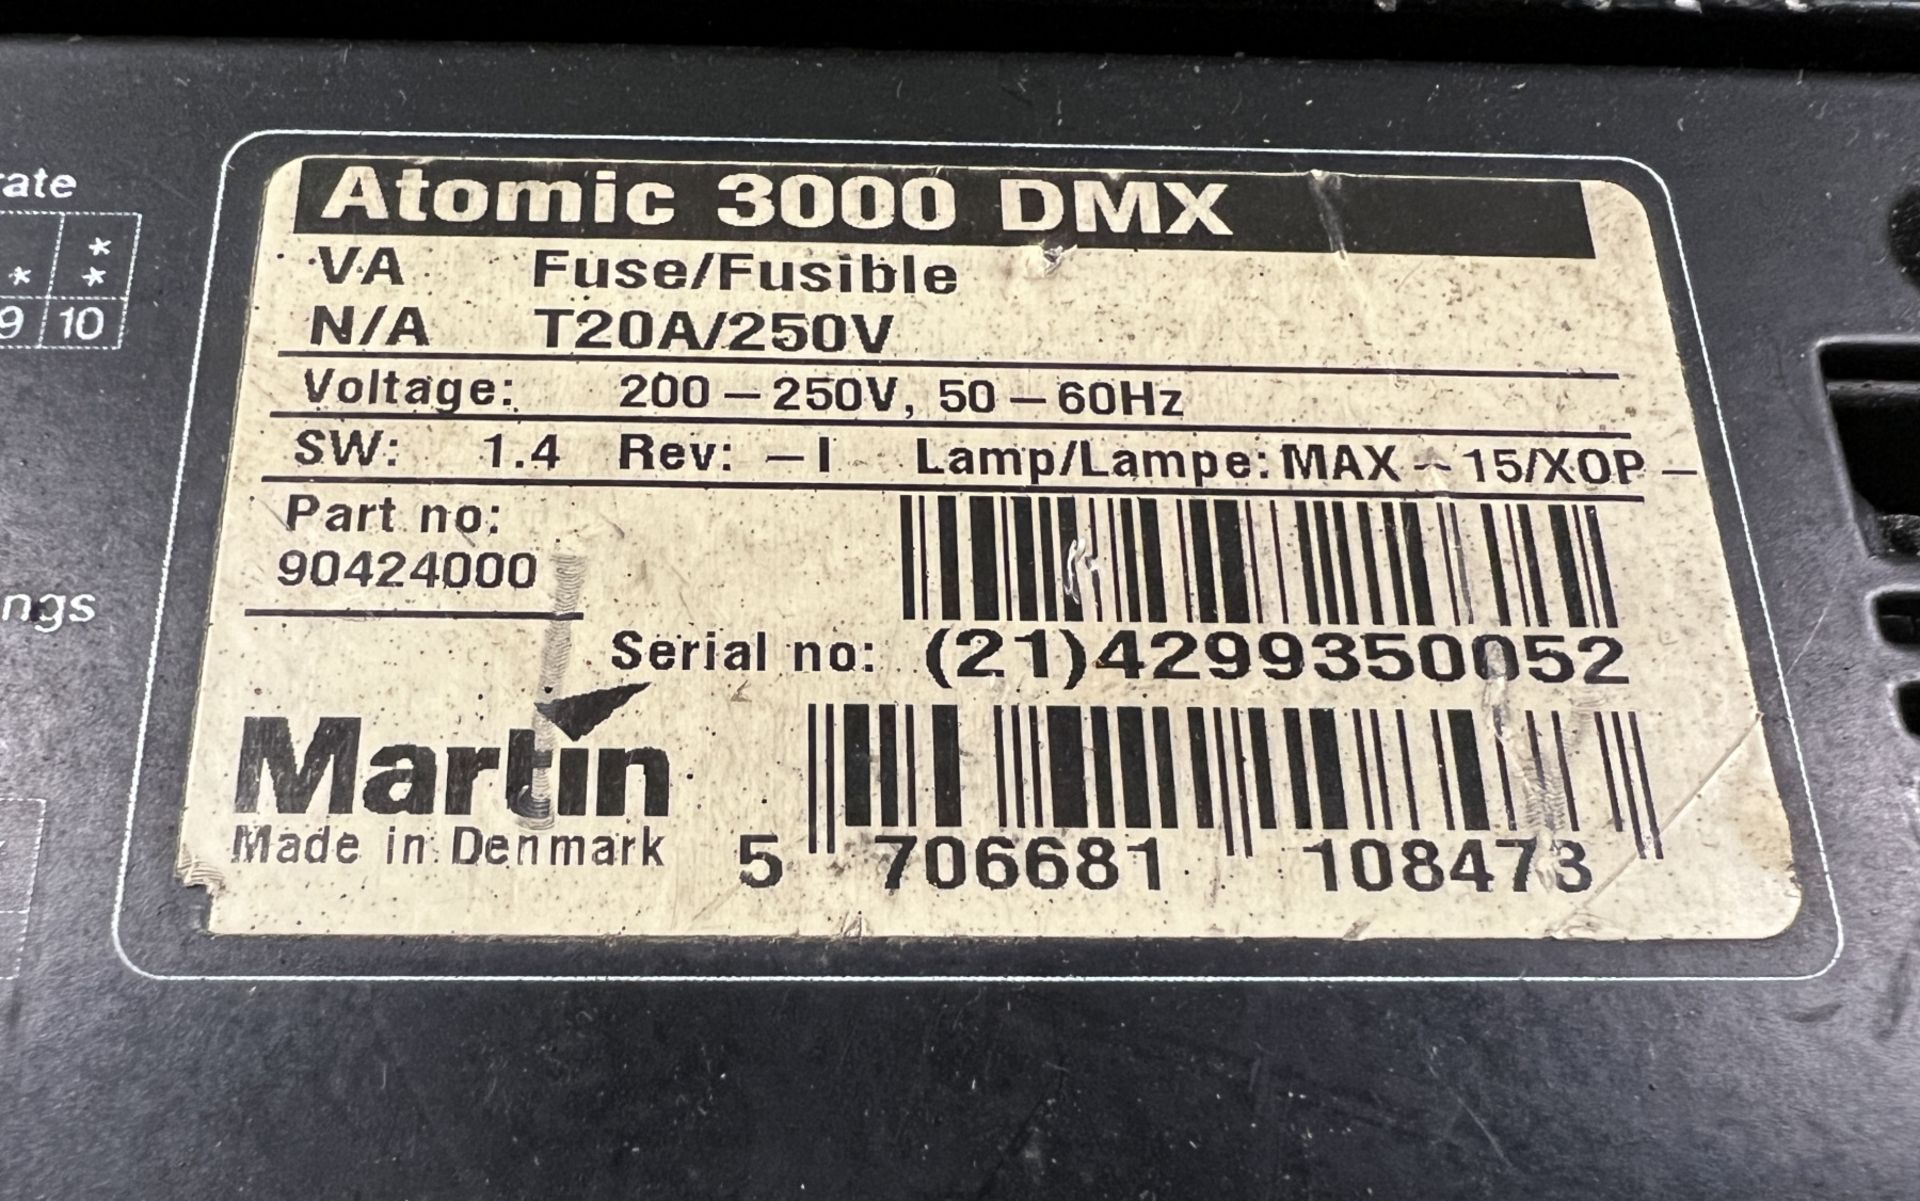 Martin Atomic 3000 DMX high impact strobe light in carry case - Image 4 of 7